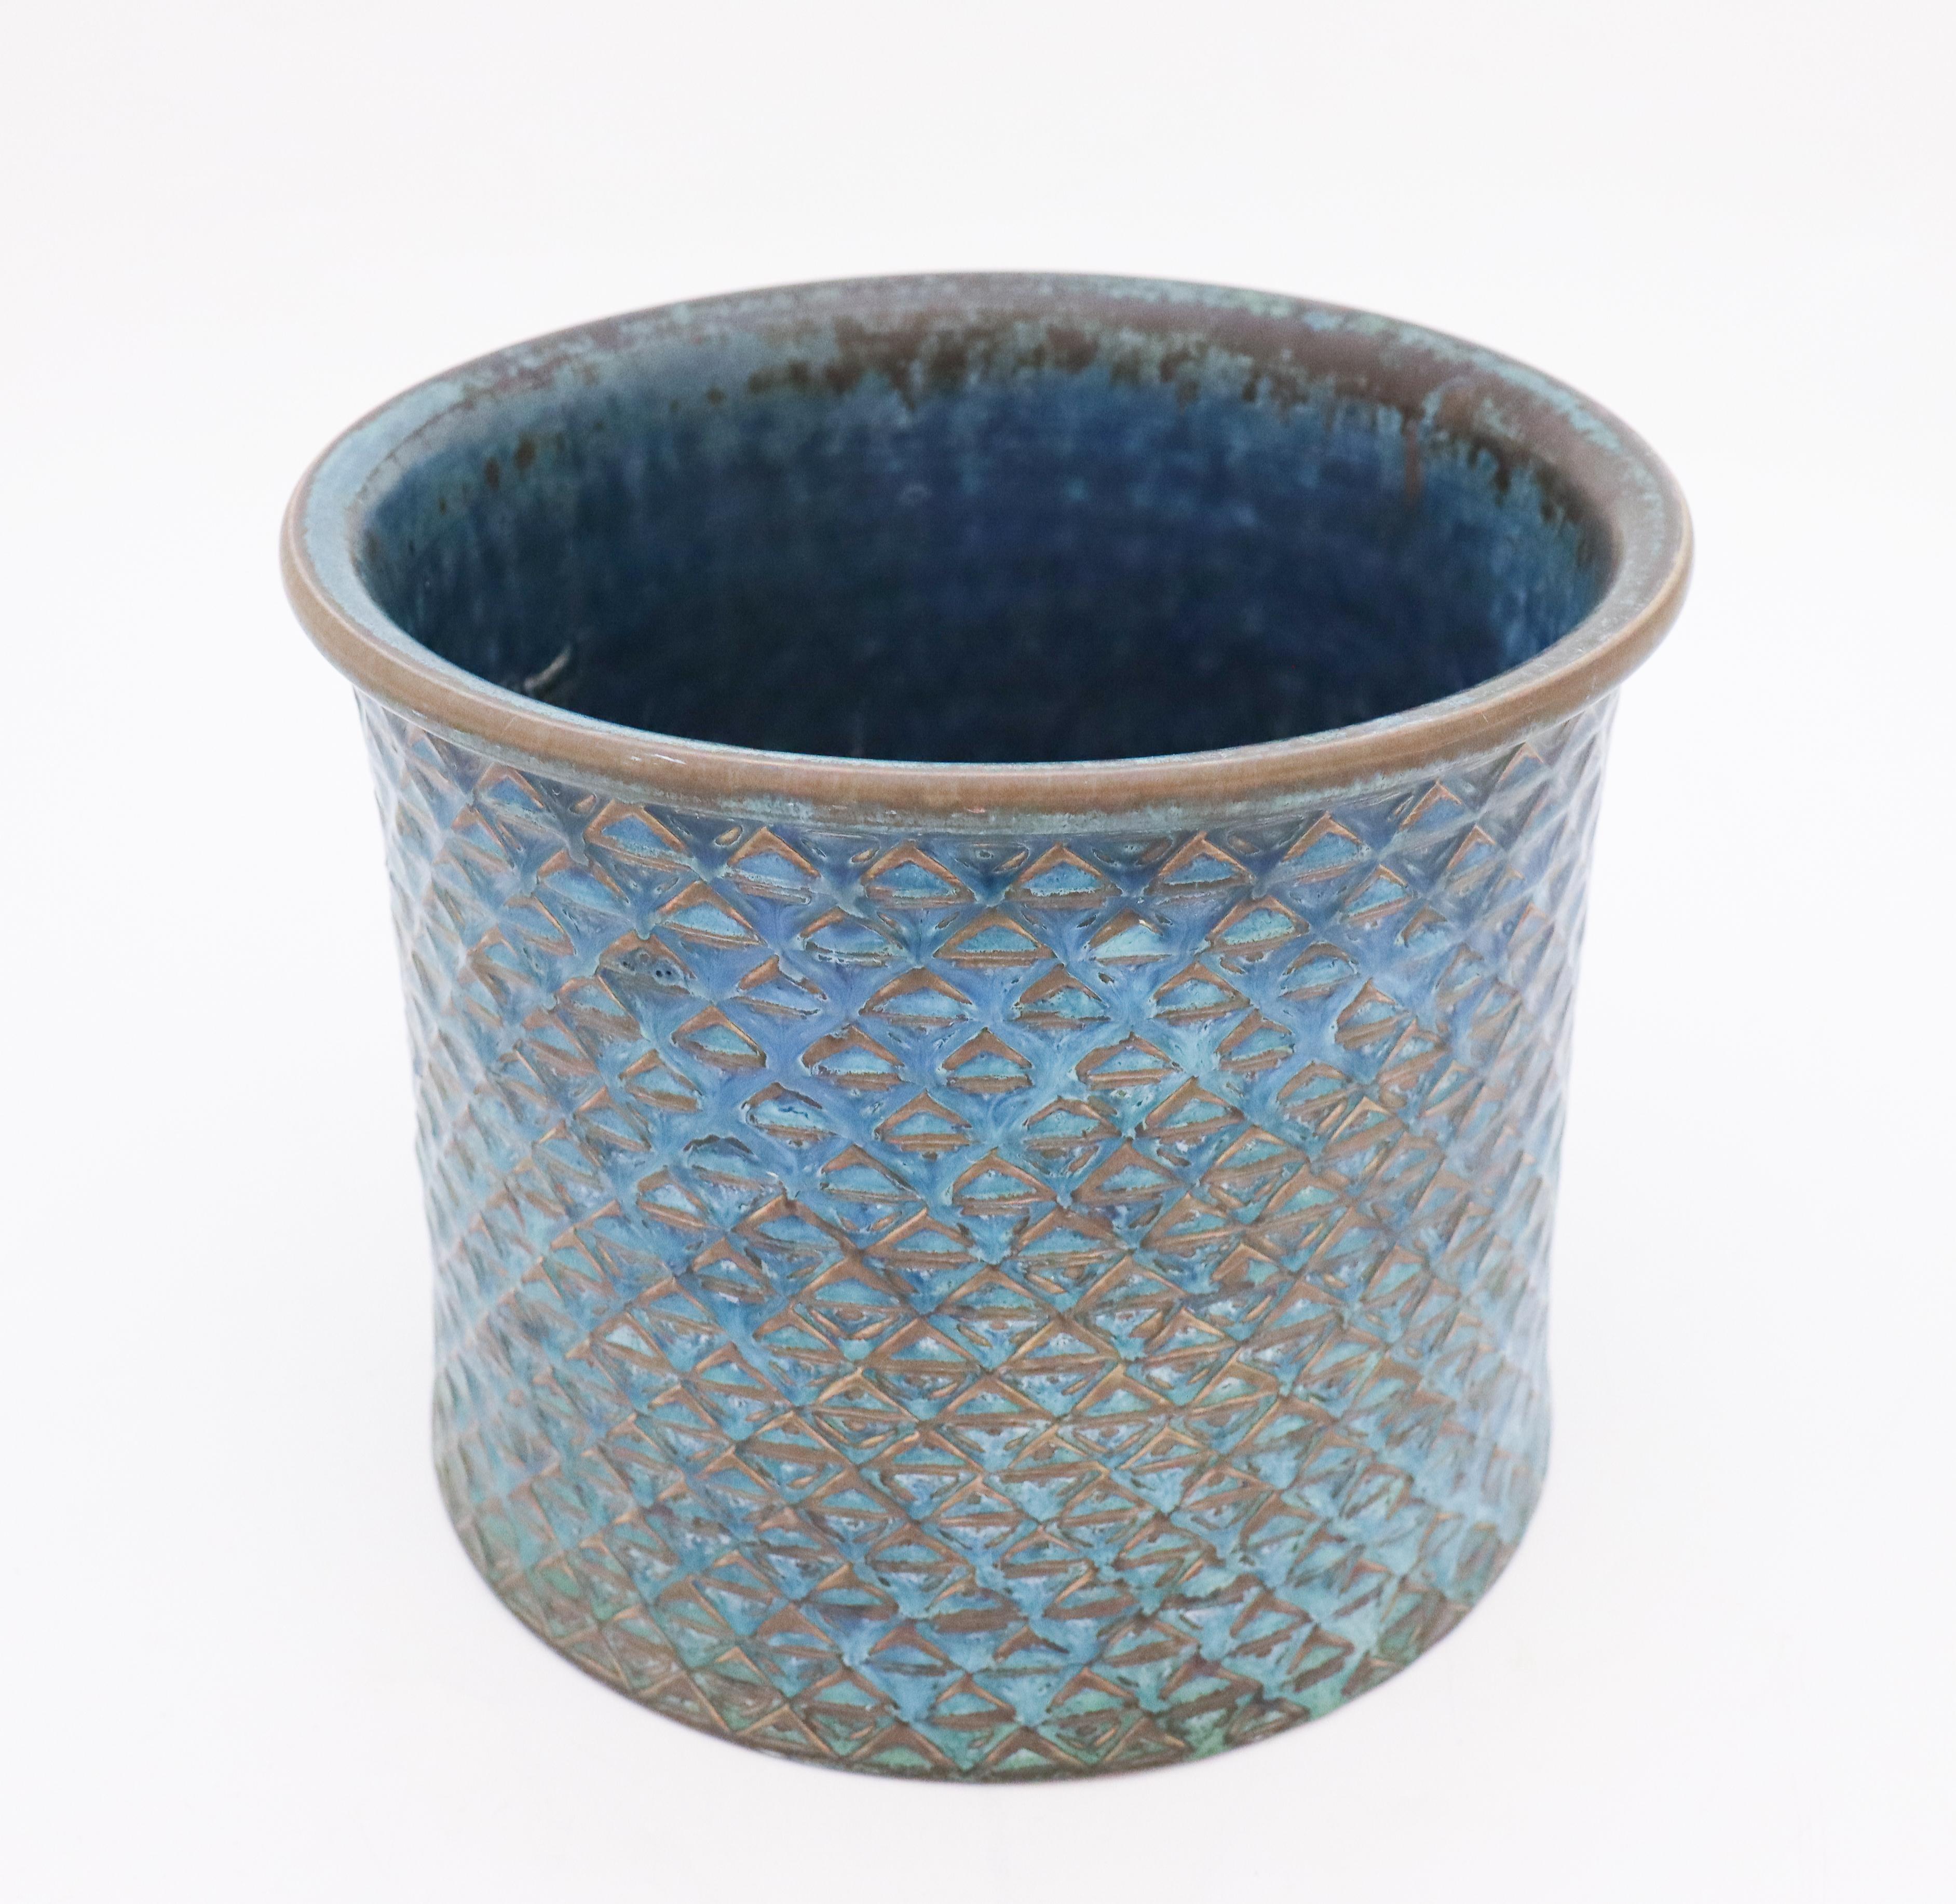 Scandinavian Modern Large Blue Flower Pot in Stoneware, Stig Lindberg, Gustavsbergs Studio, Vintage